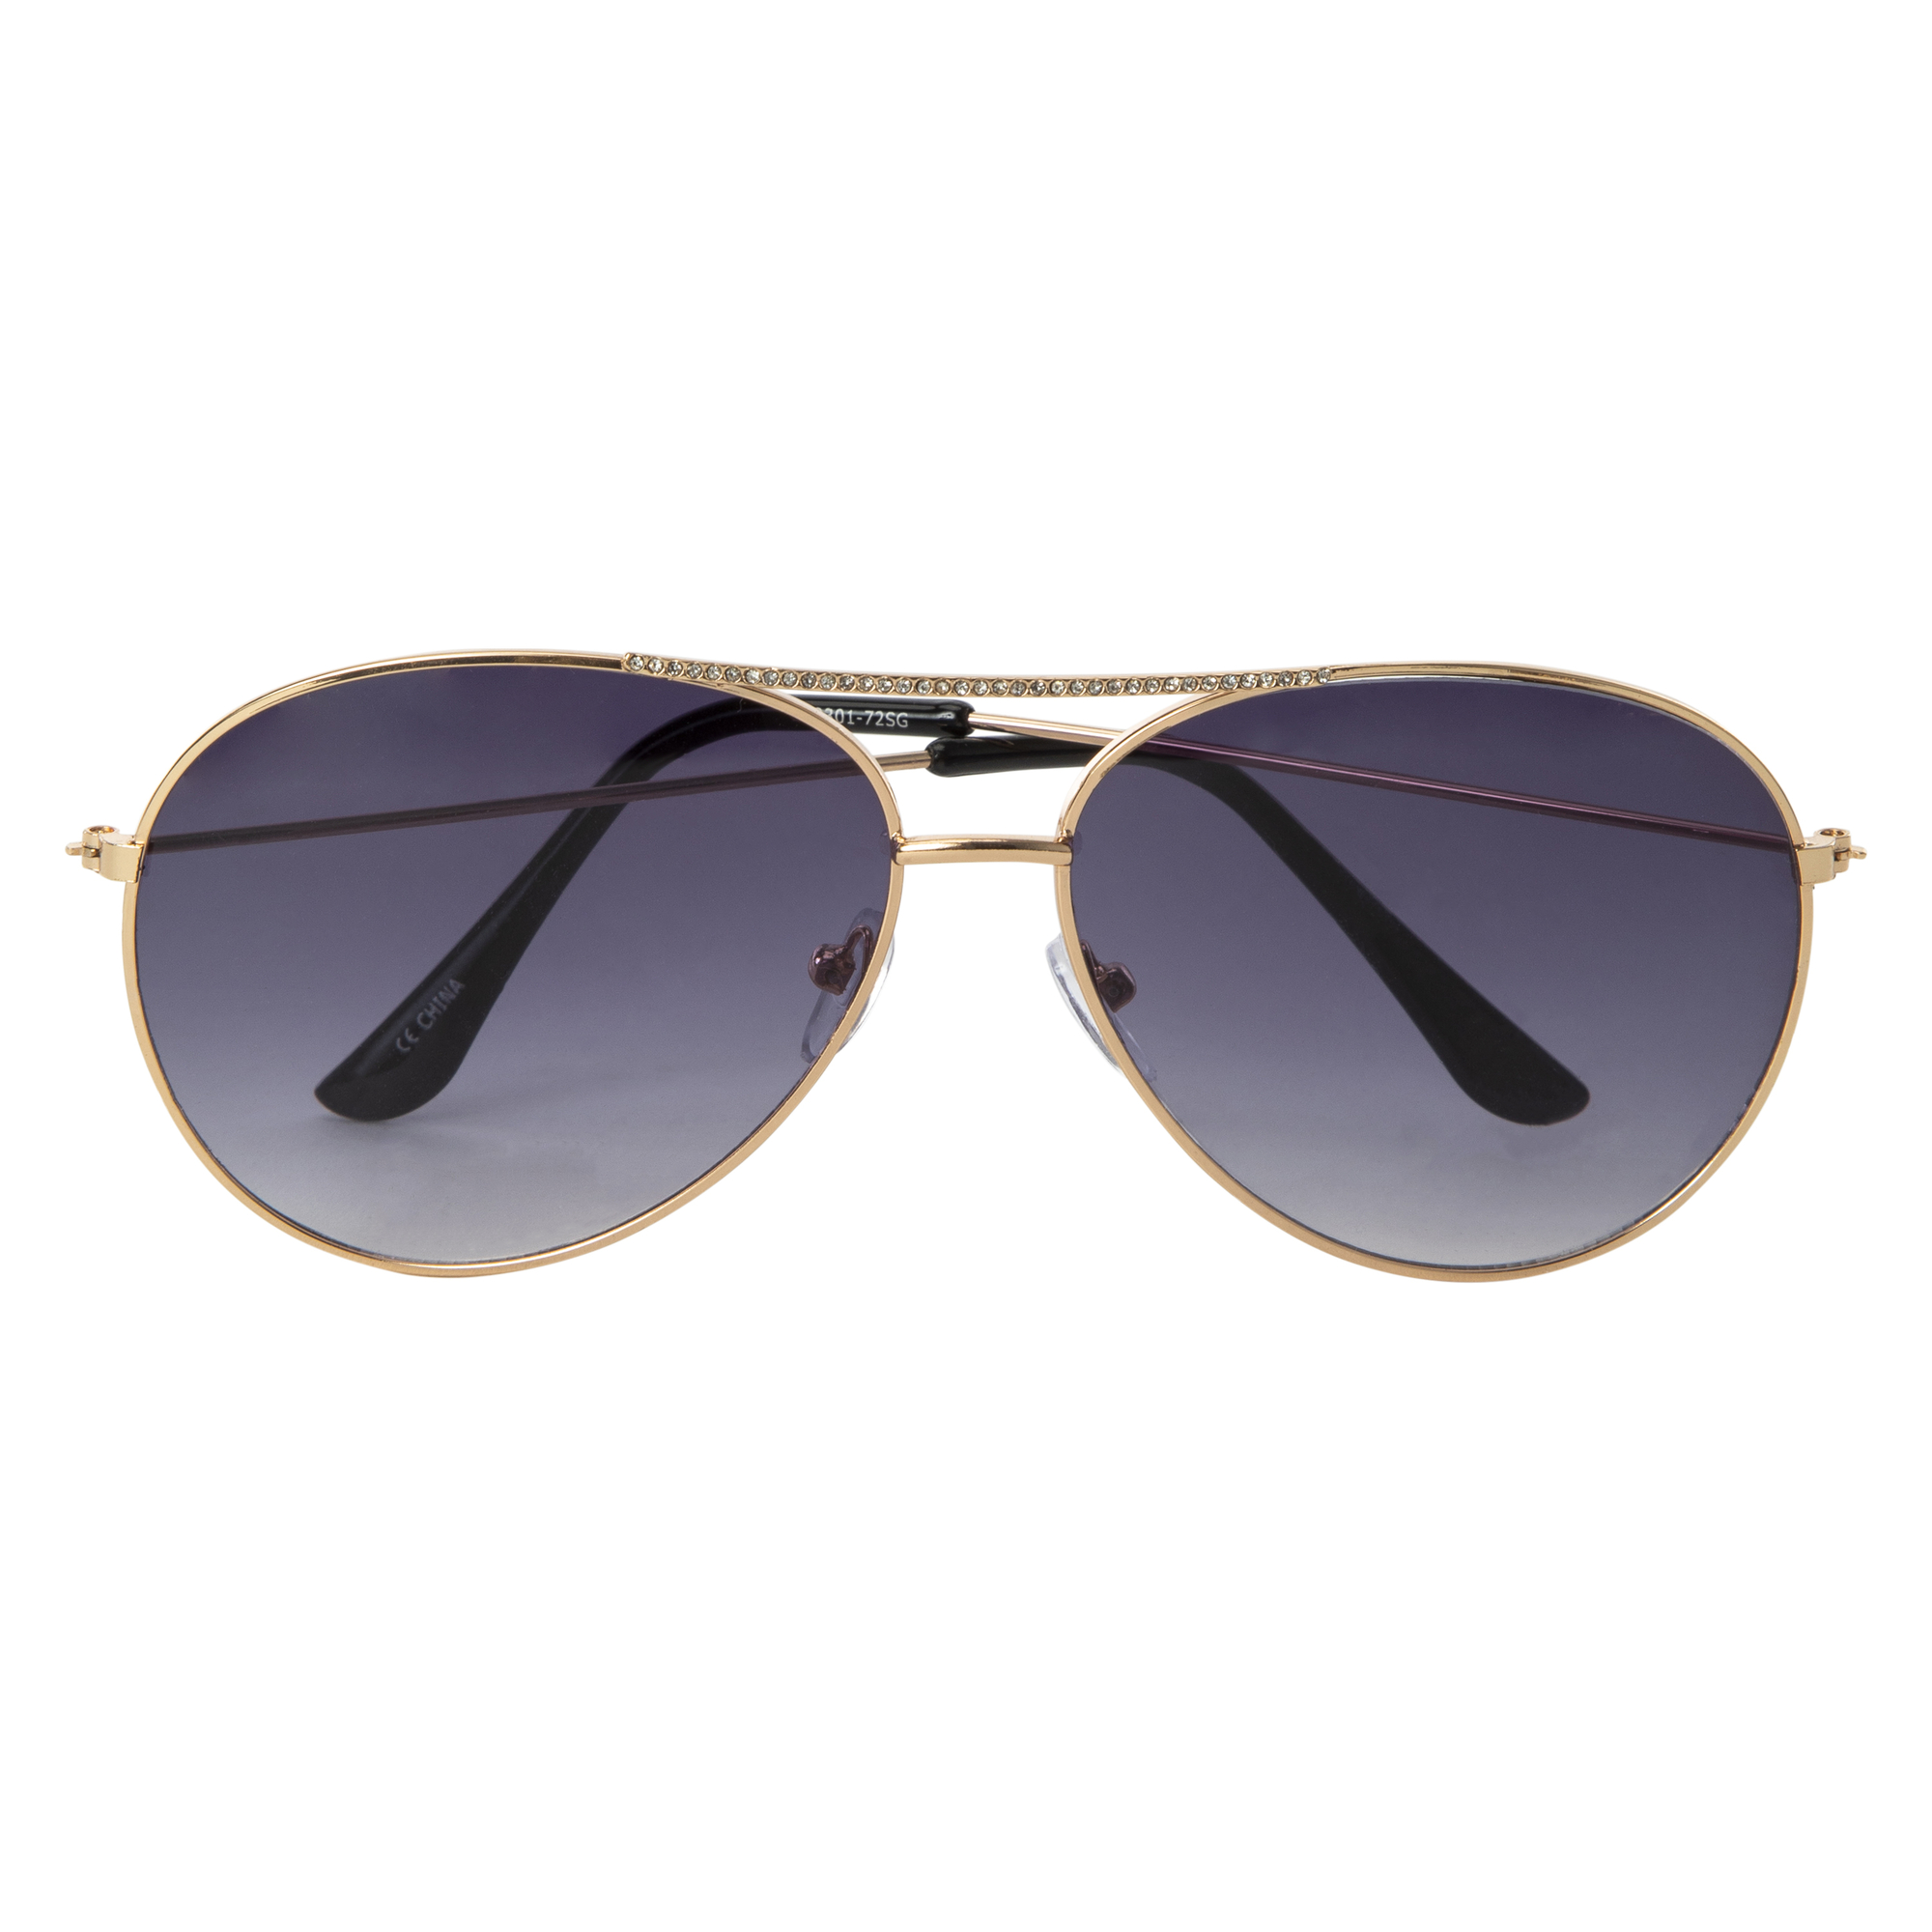 ladies aviator sunglasses with rhinestone brow bar